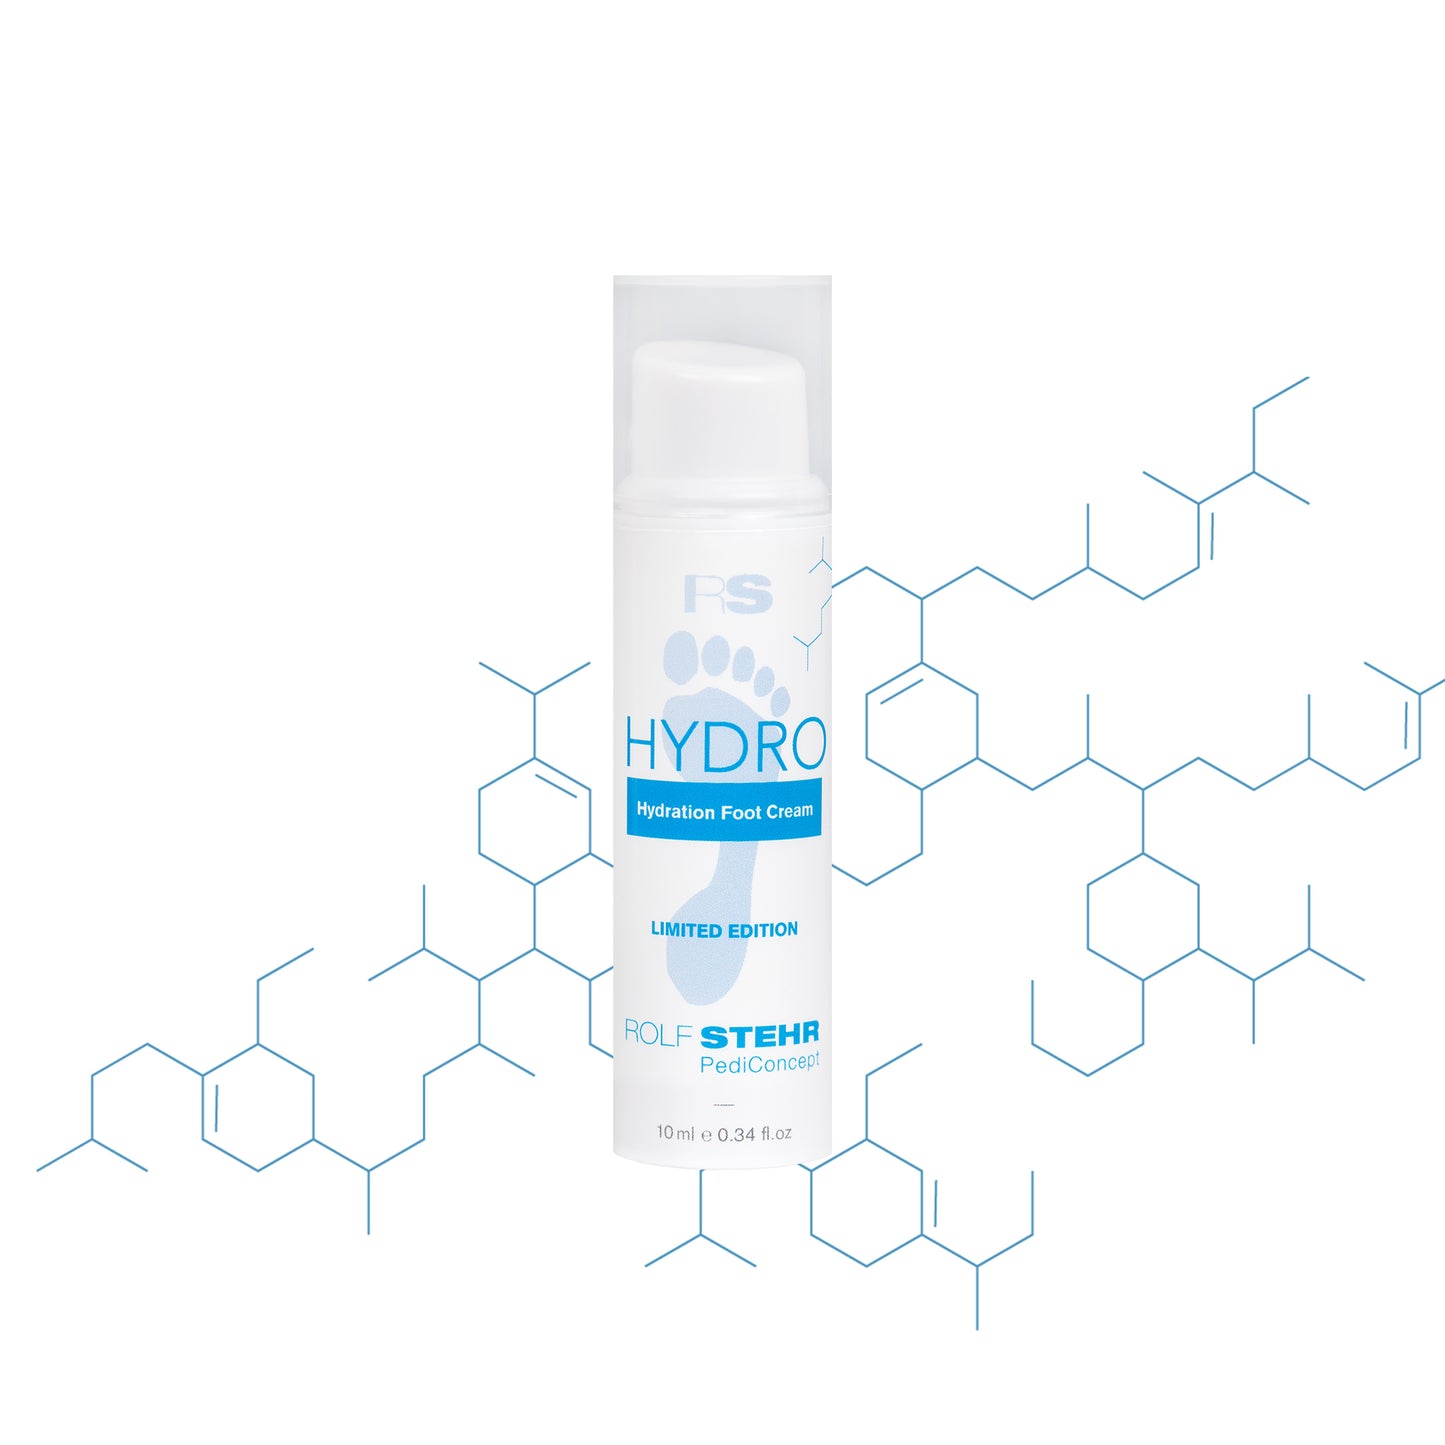 HYDRO - Hydration Foot Cream Limited Edition <br> PediConcept